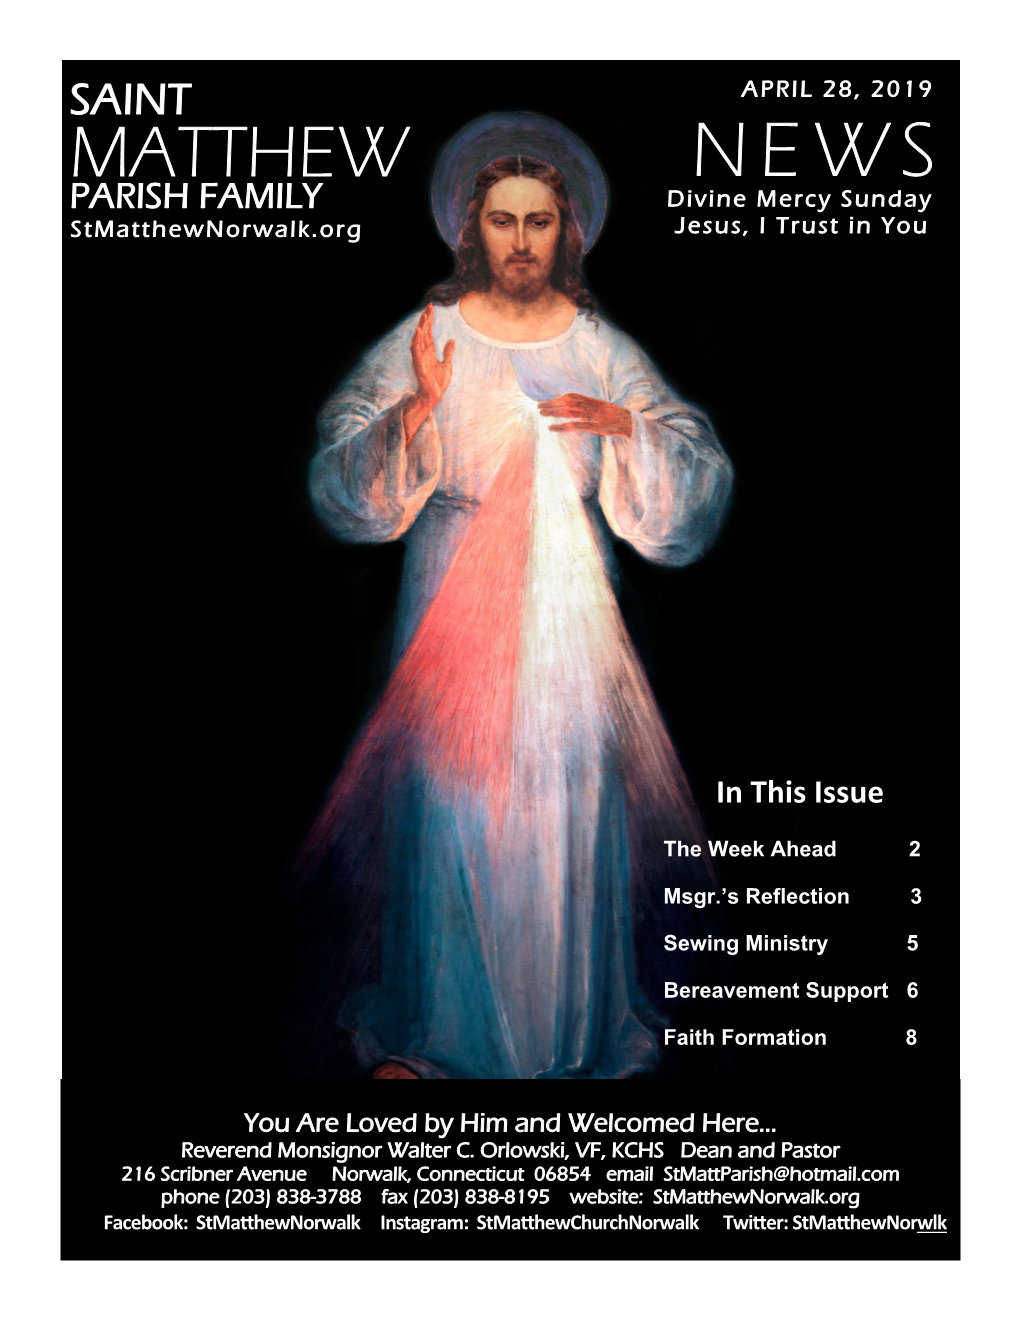 April 28, 2019, Divine Mercy Sunday